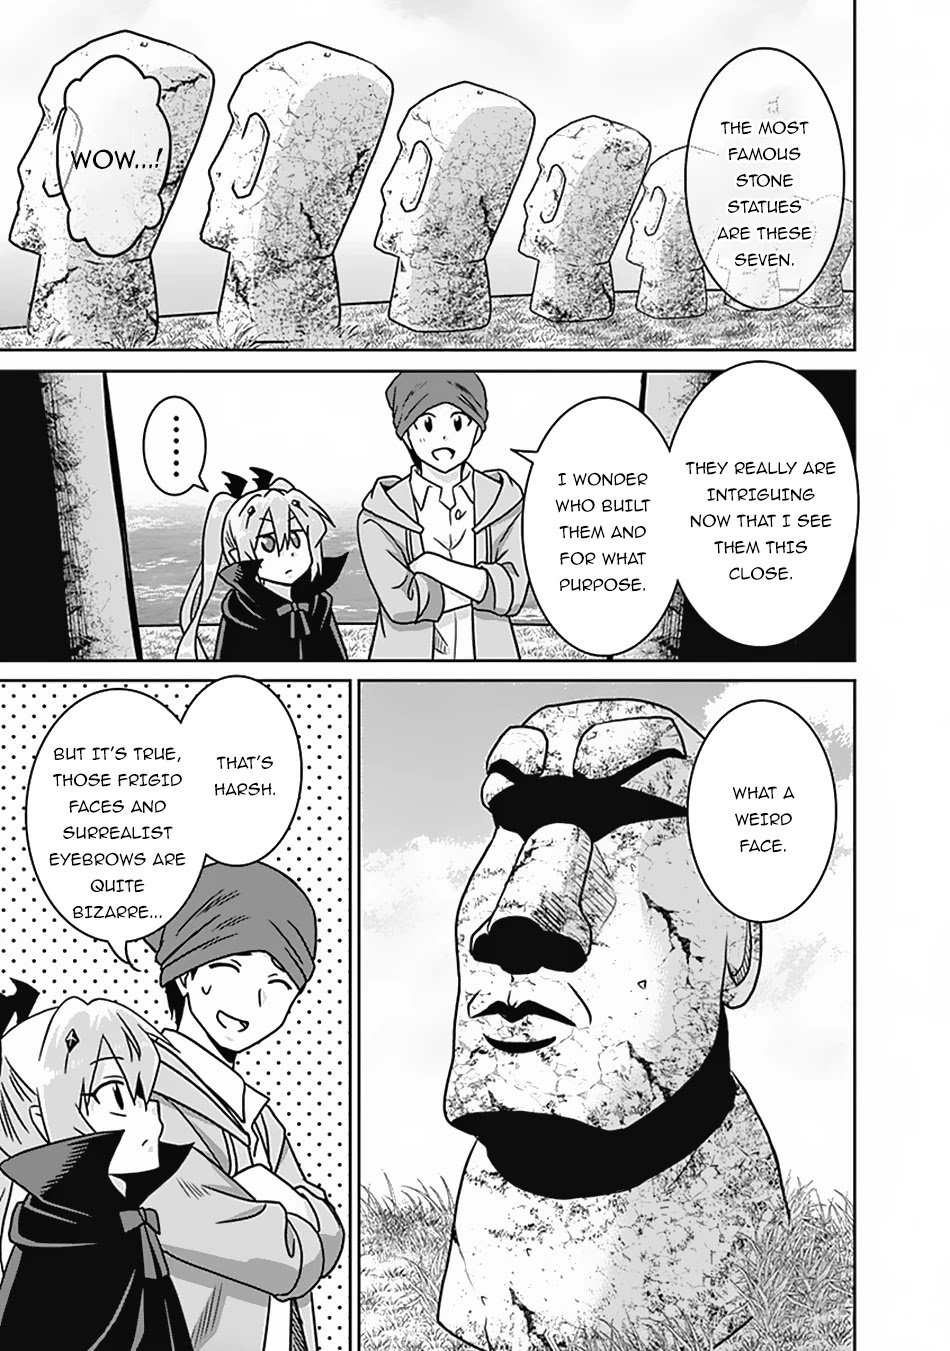 Ler Saikyou no Shuzoku ga Ningen Datta Ken Manga Capítulo 53 em